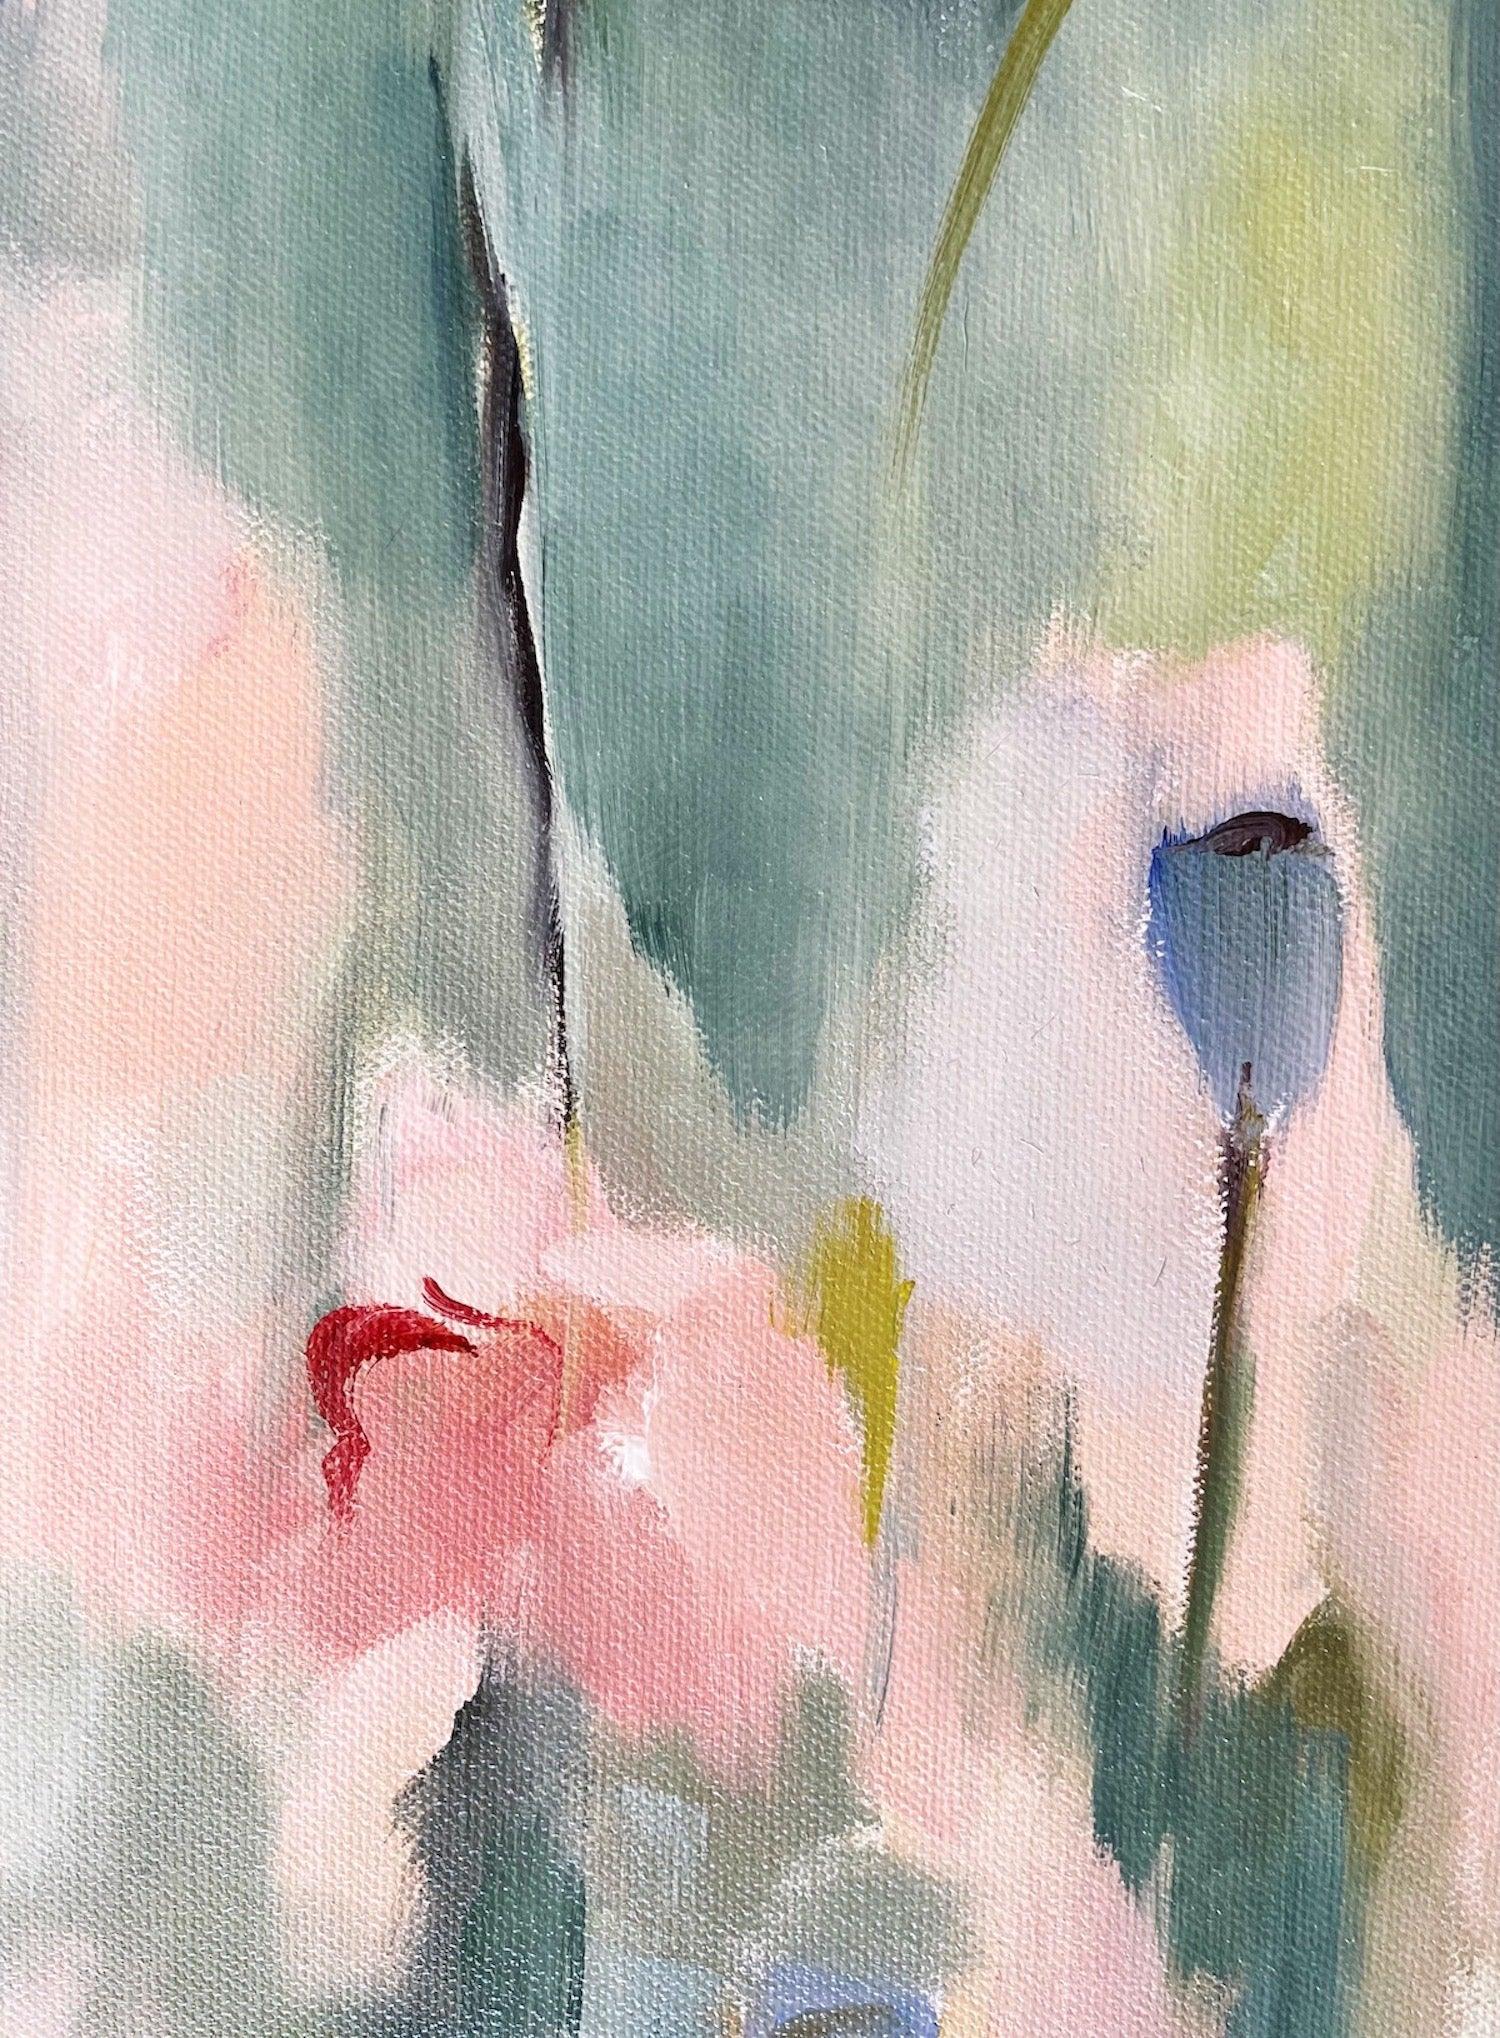 "Enchanted April" Print - Mary James Ketch Studio